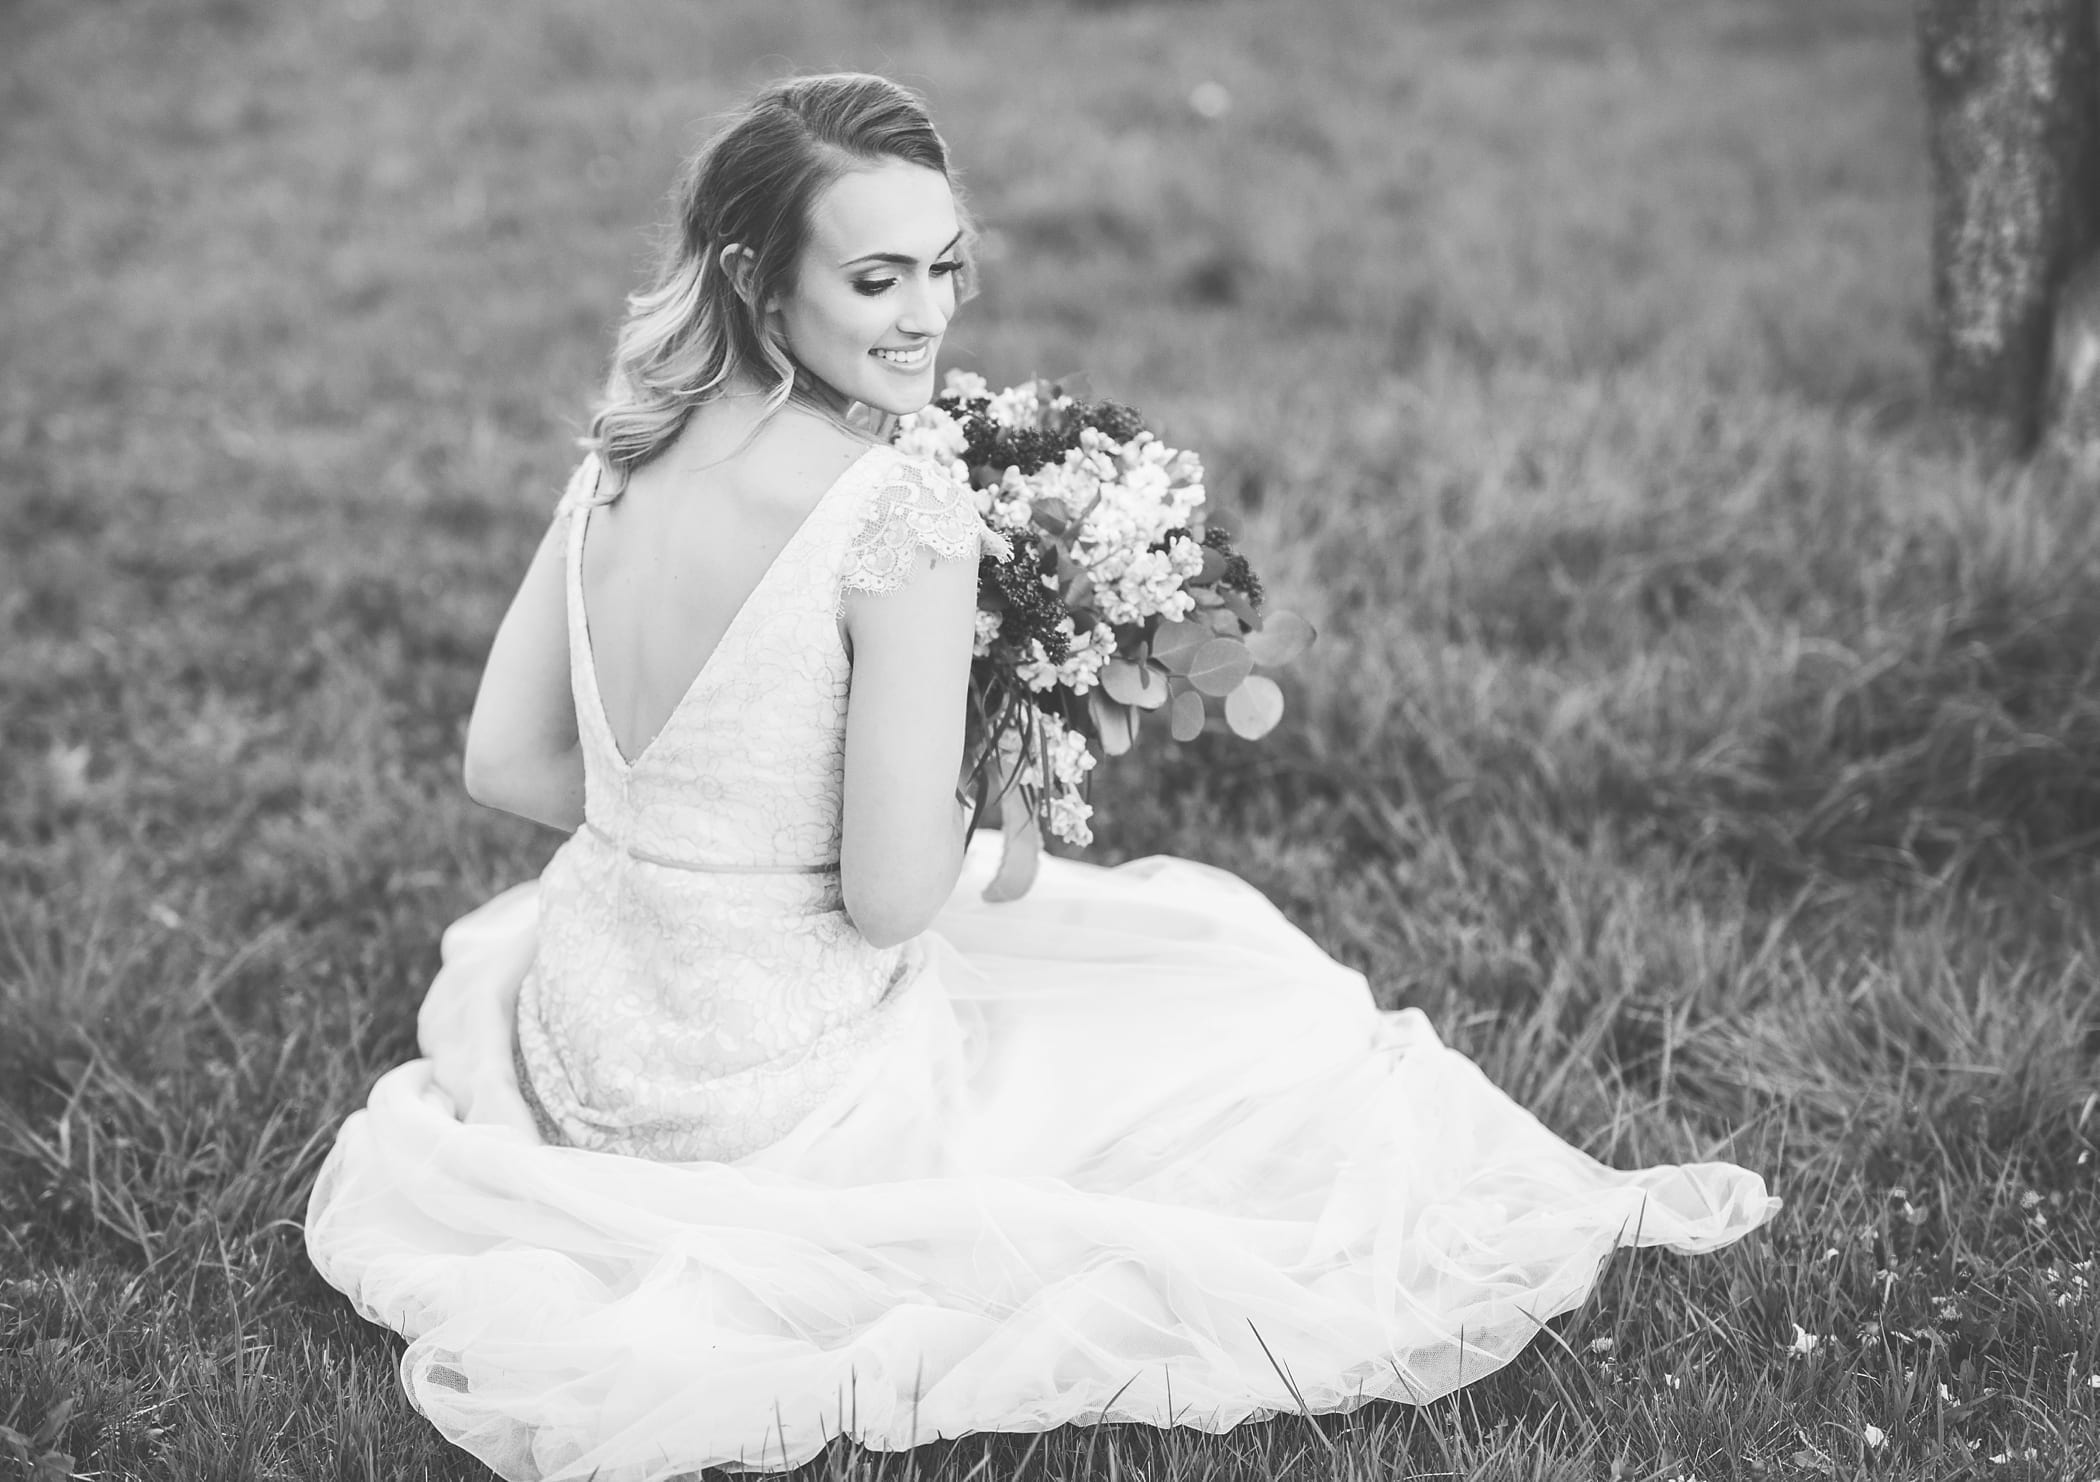 Spring Bride by Michelle & Logan Photo+Films